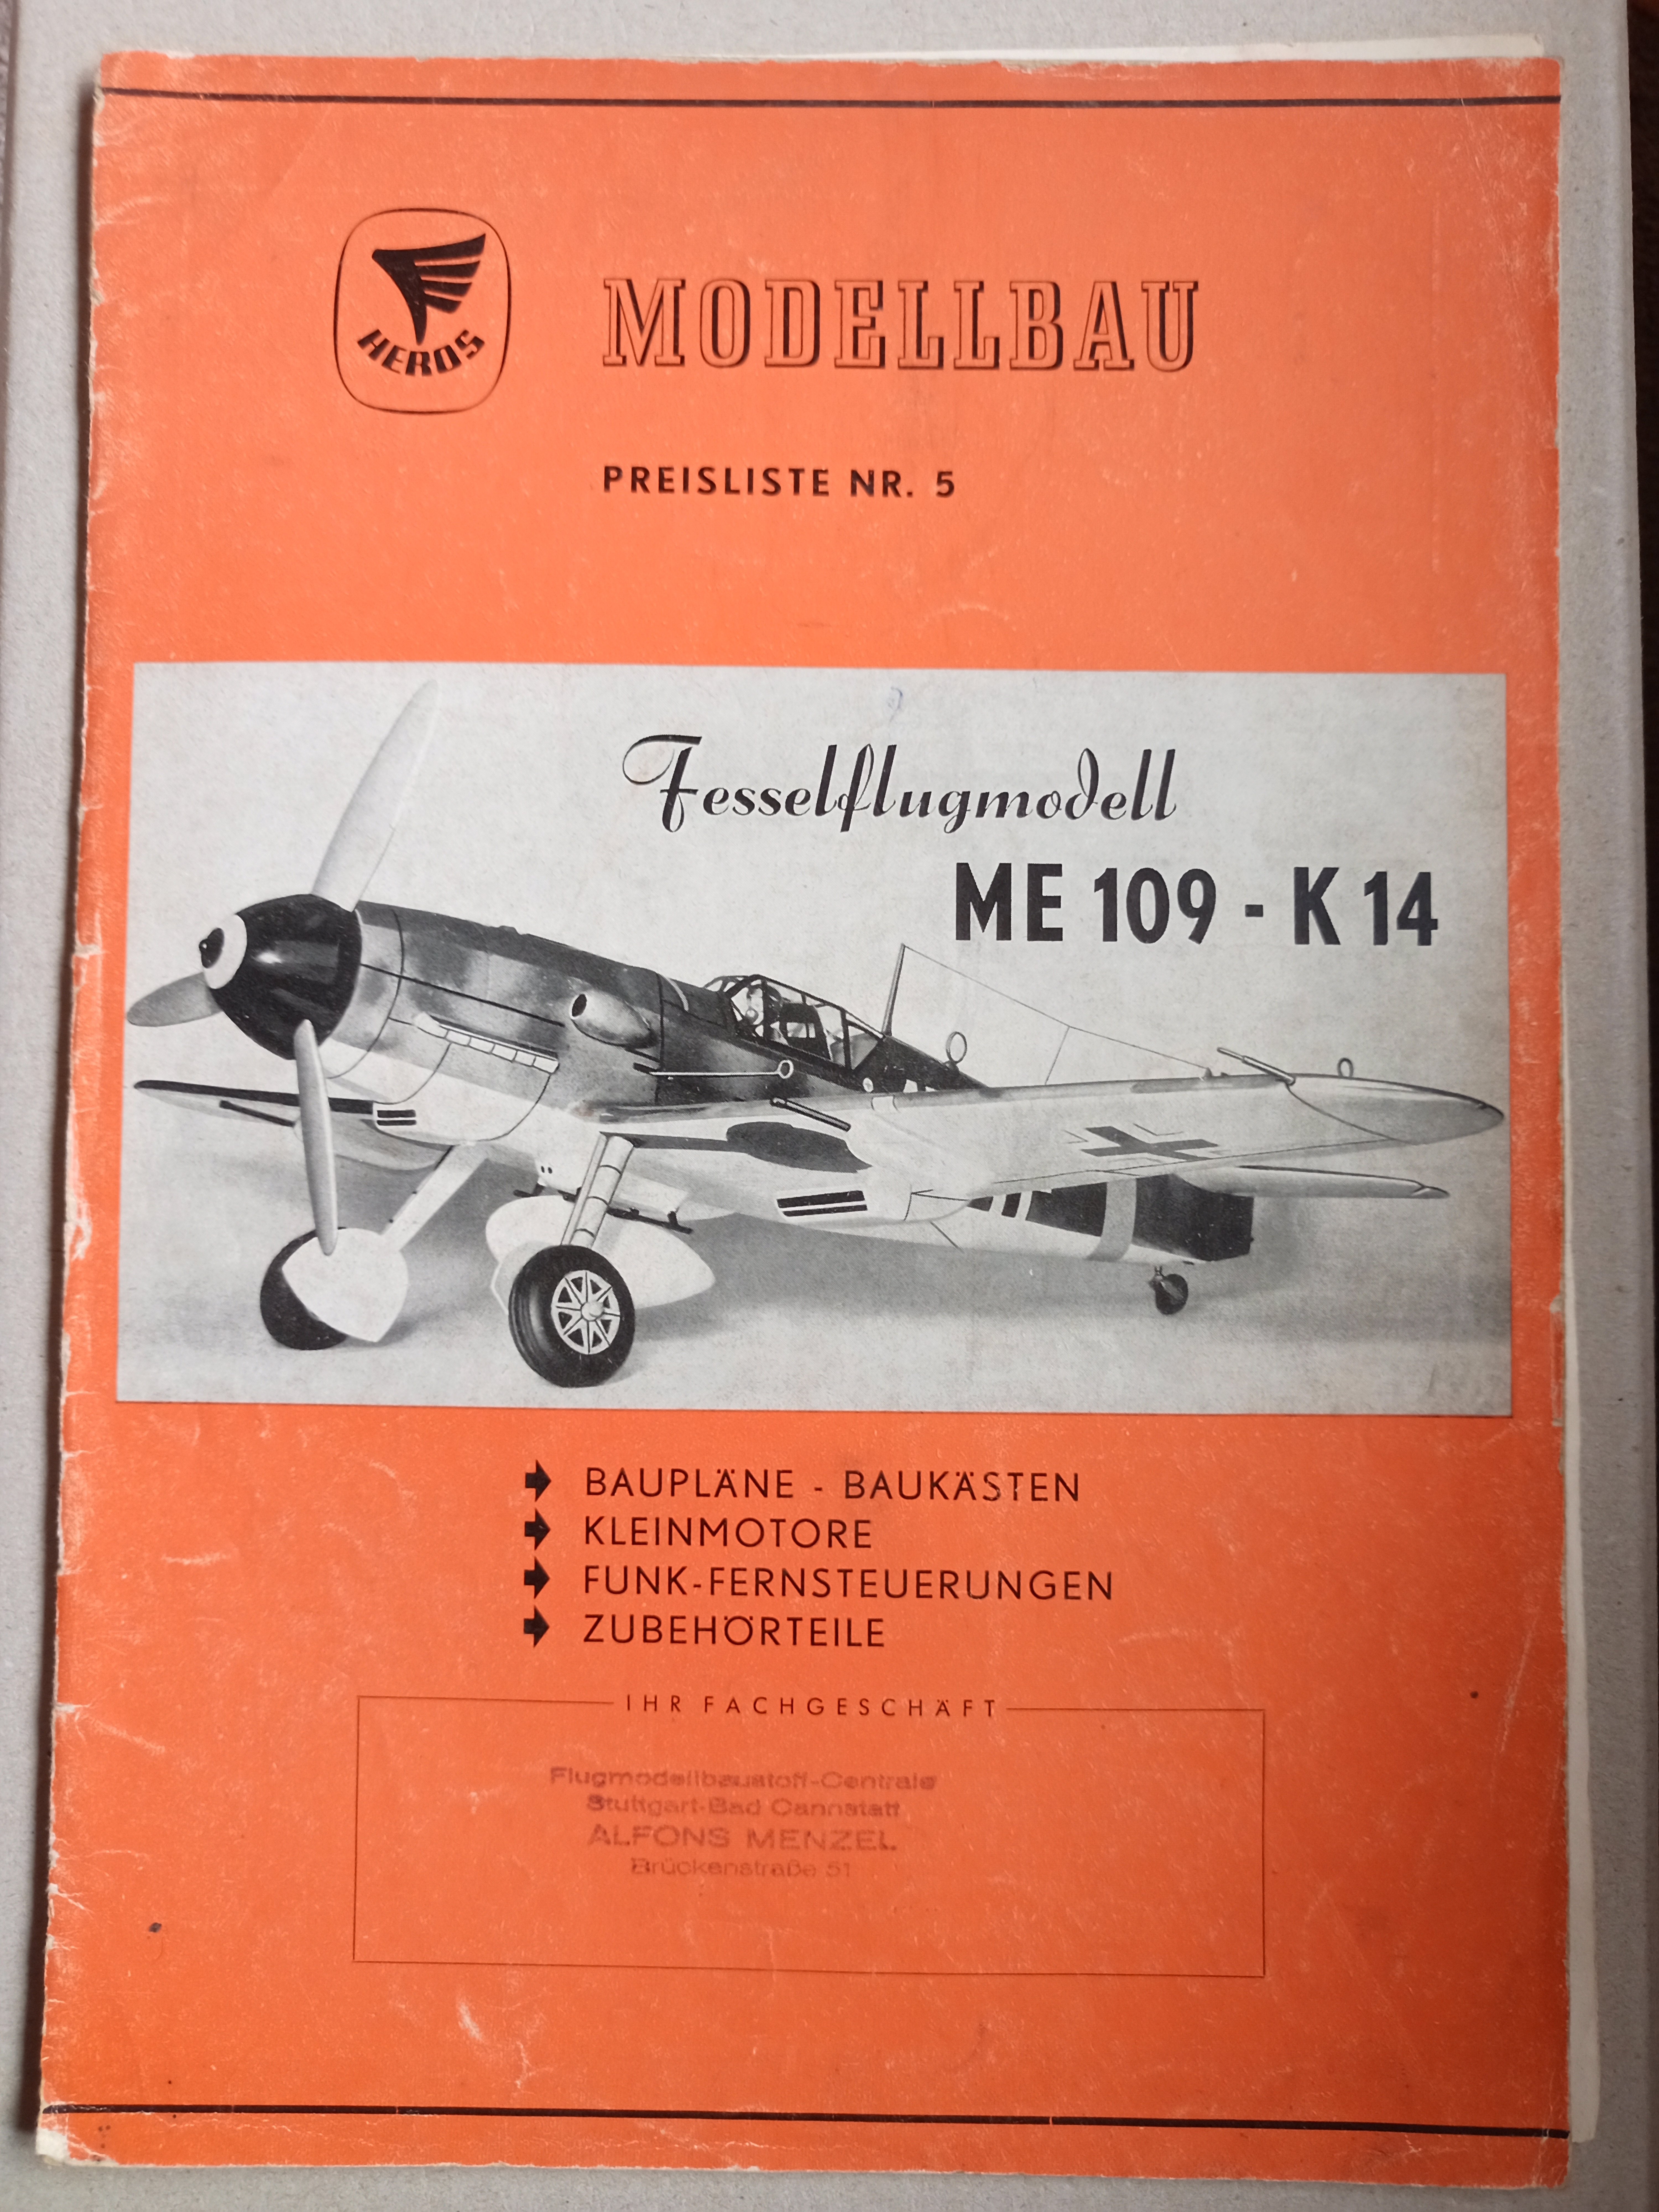 Modellbau Heros (Deutsches Segelflugmuseum mit Modellflug CC BY-NC-SA)